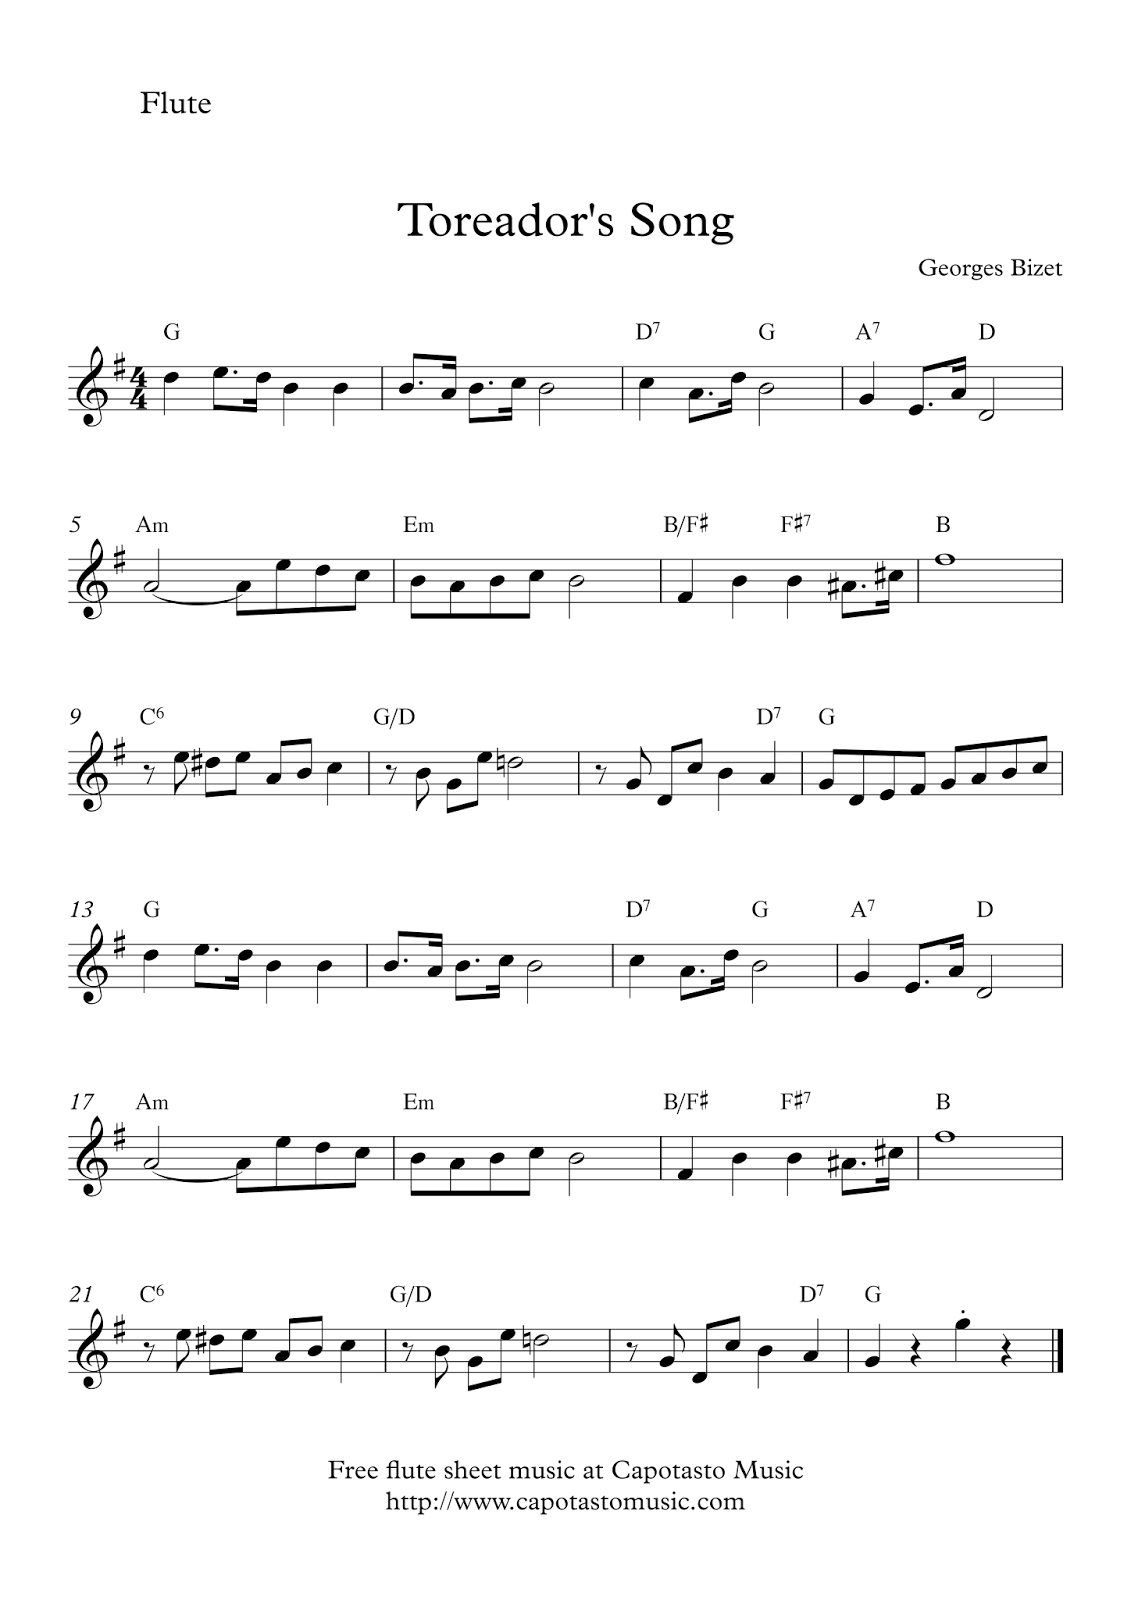 Free Printable Sheet Music Toreador S Song Free Flute Sheet Music